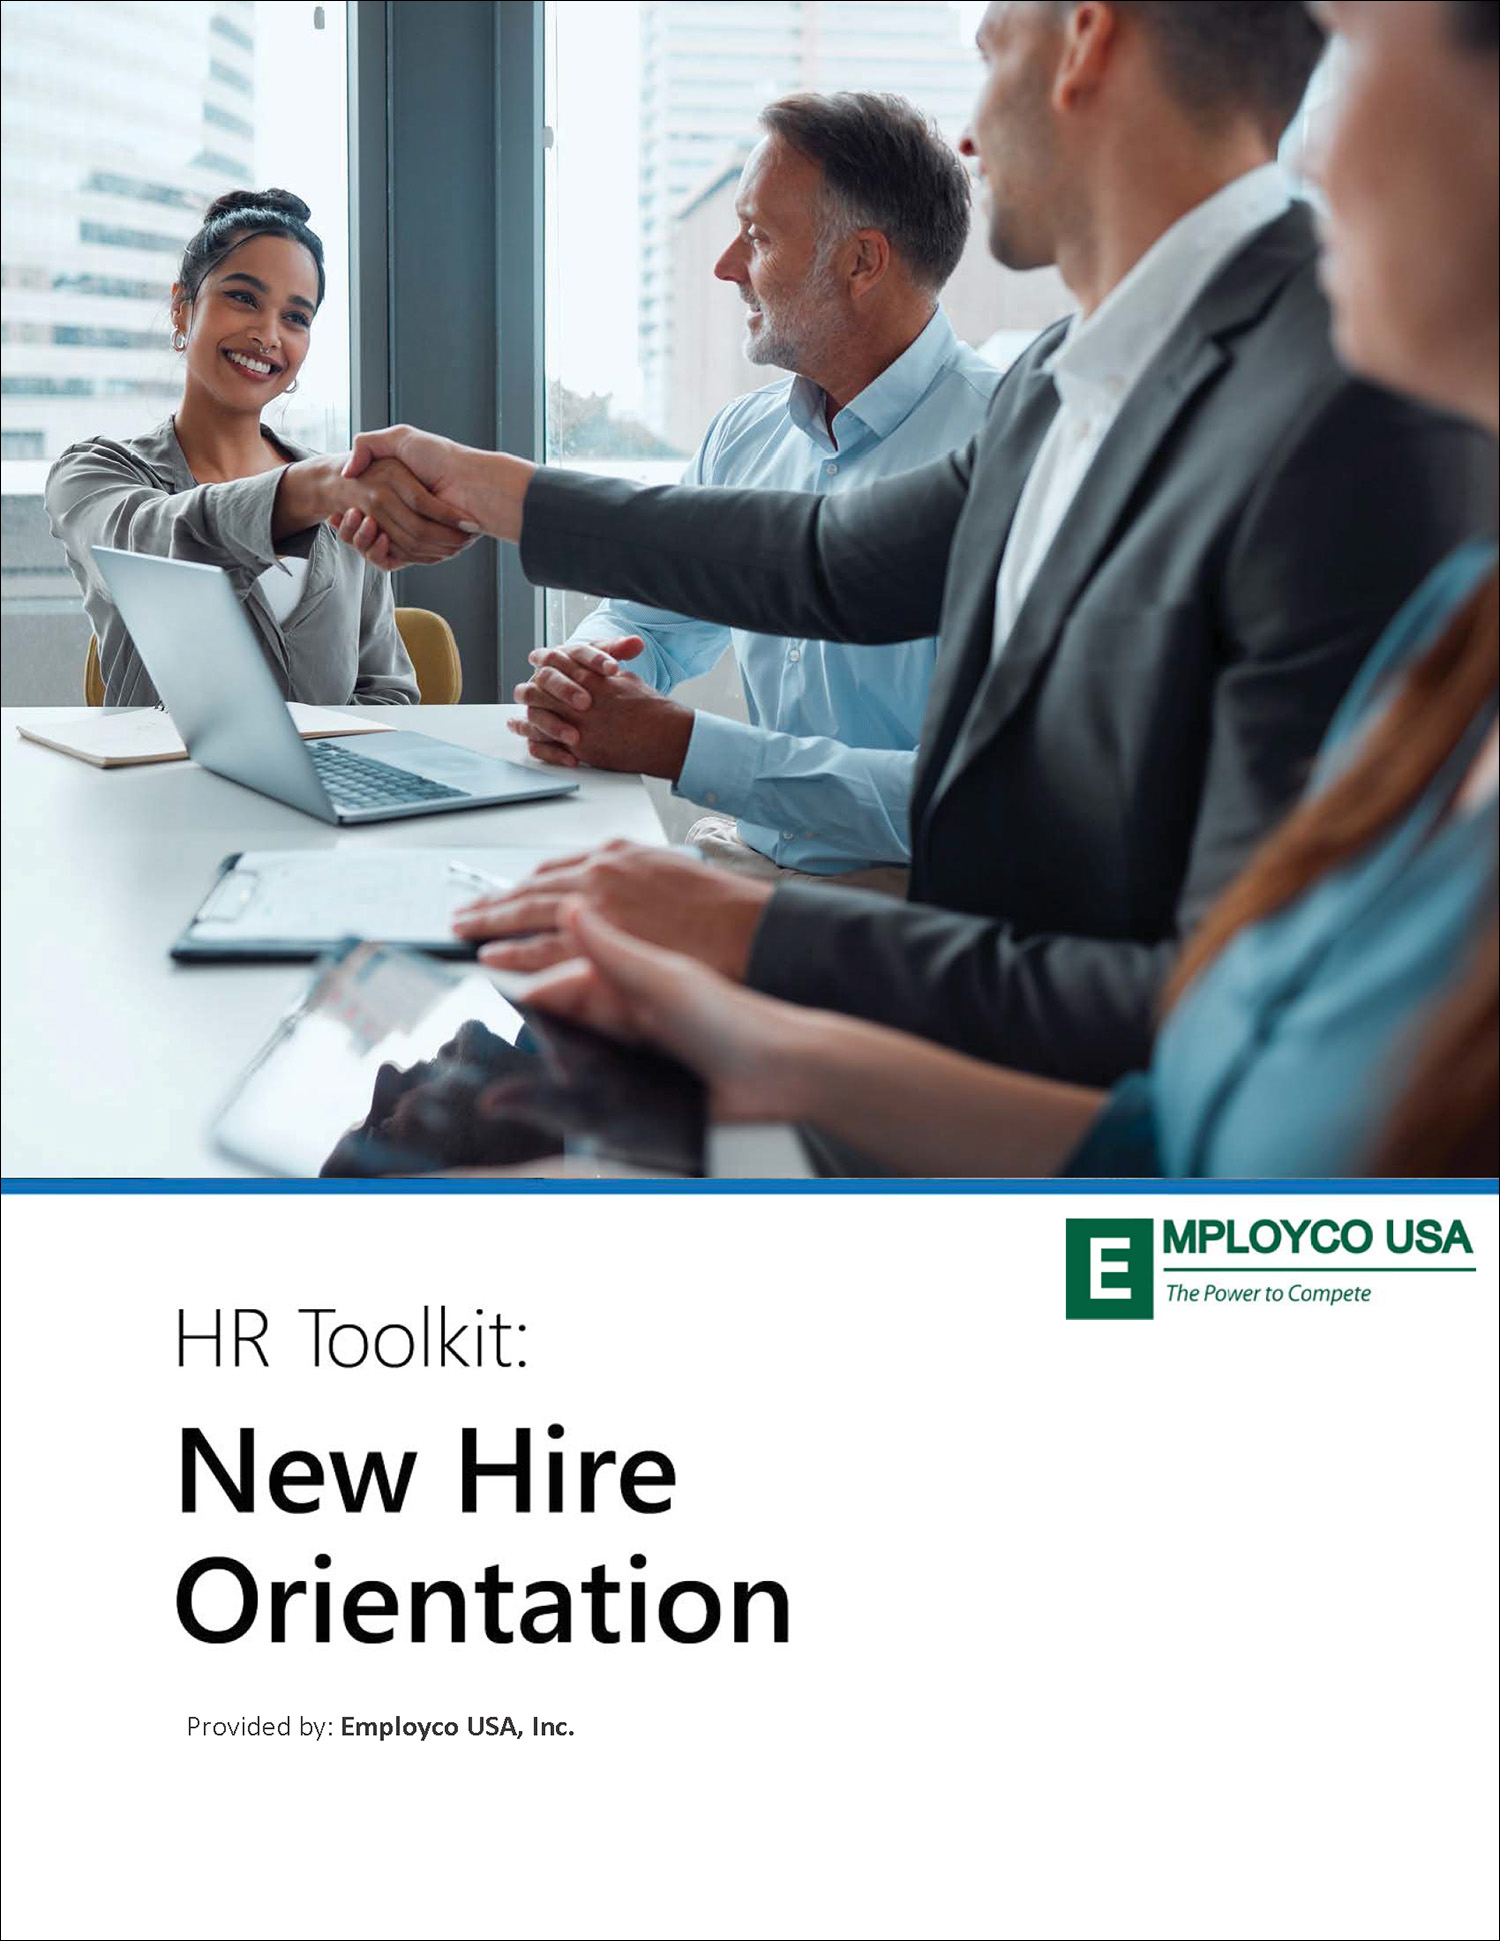 HR Toolkit: New Hire Orientation